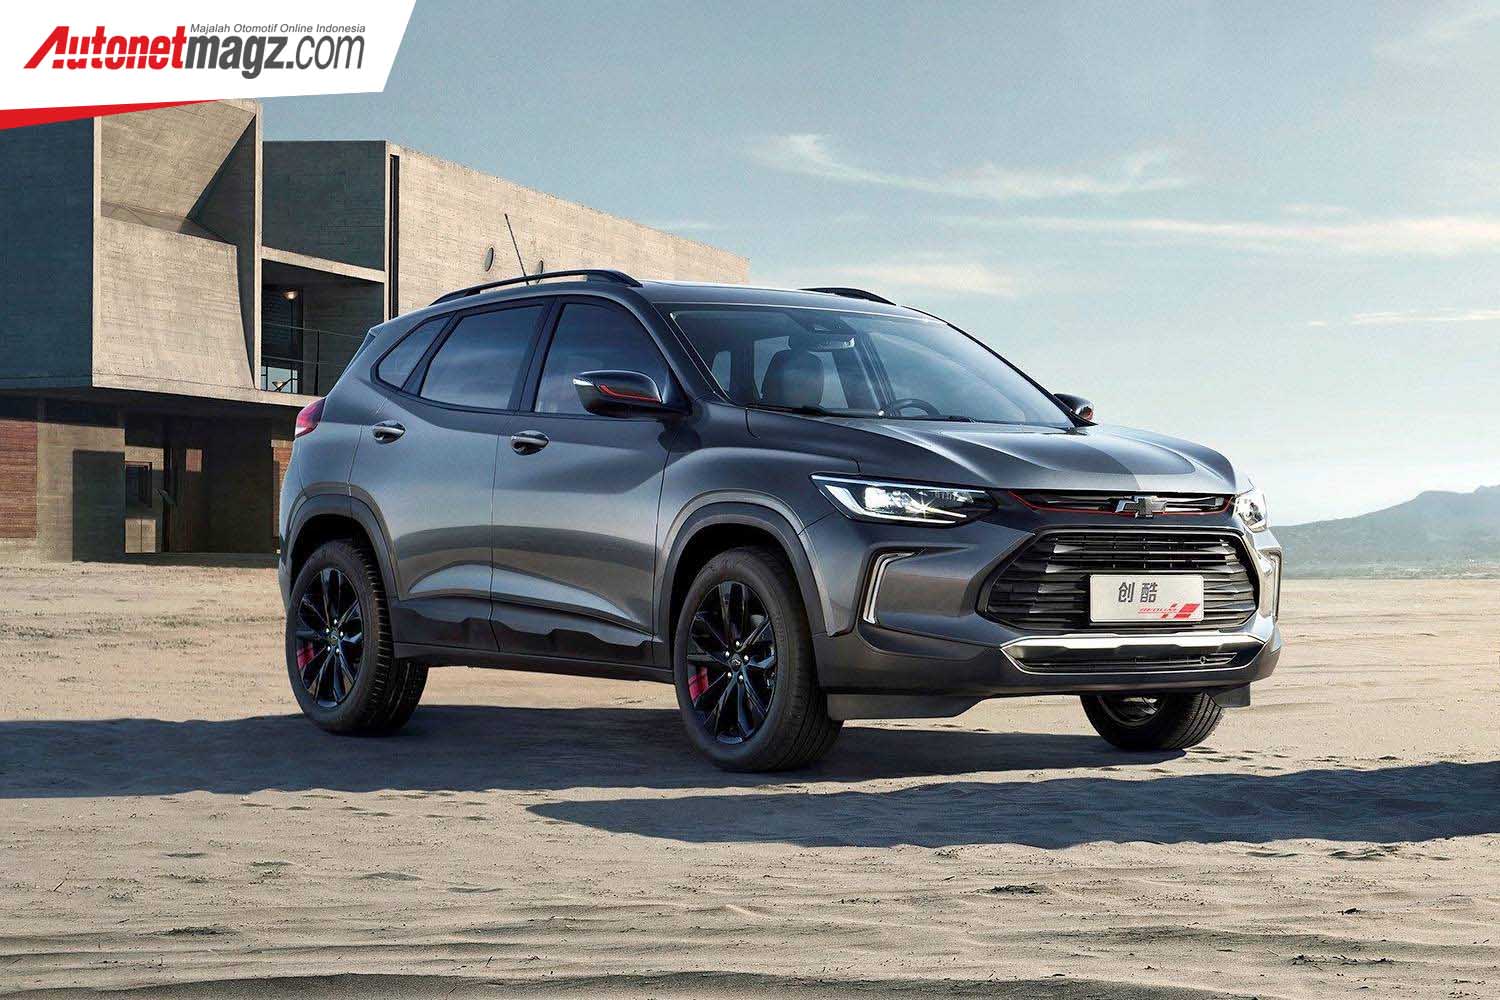 Berita, All New Chevolet Tracker China 2019: All New Chevrolet Tracker China : Akankah Jadi Suksesor Trax?